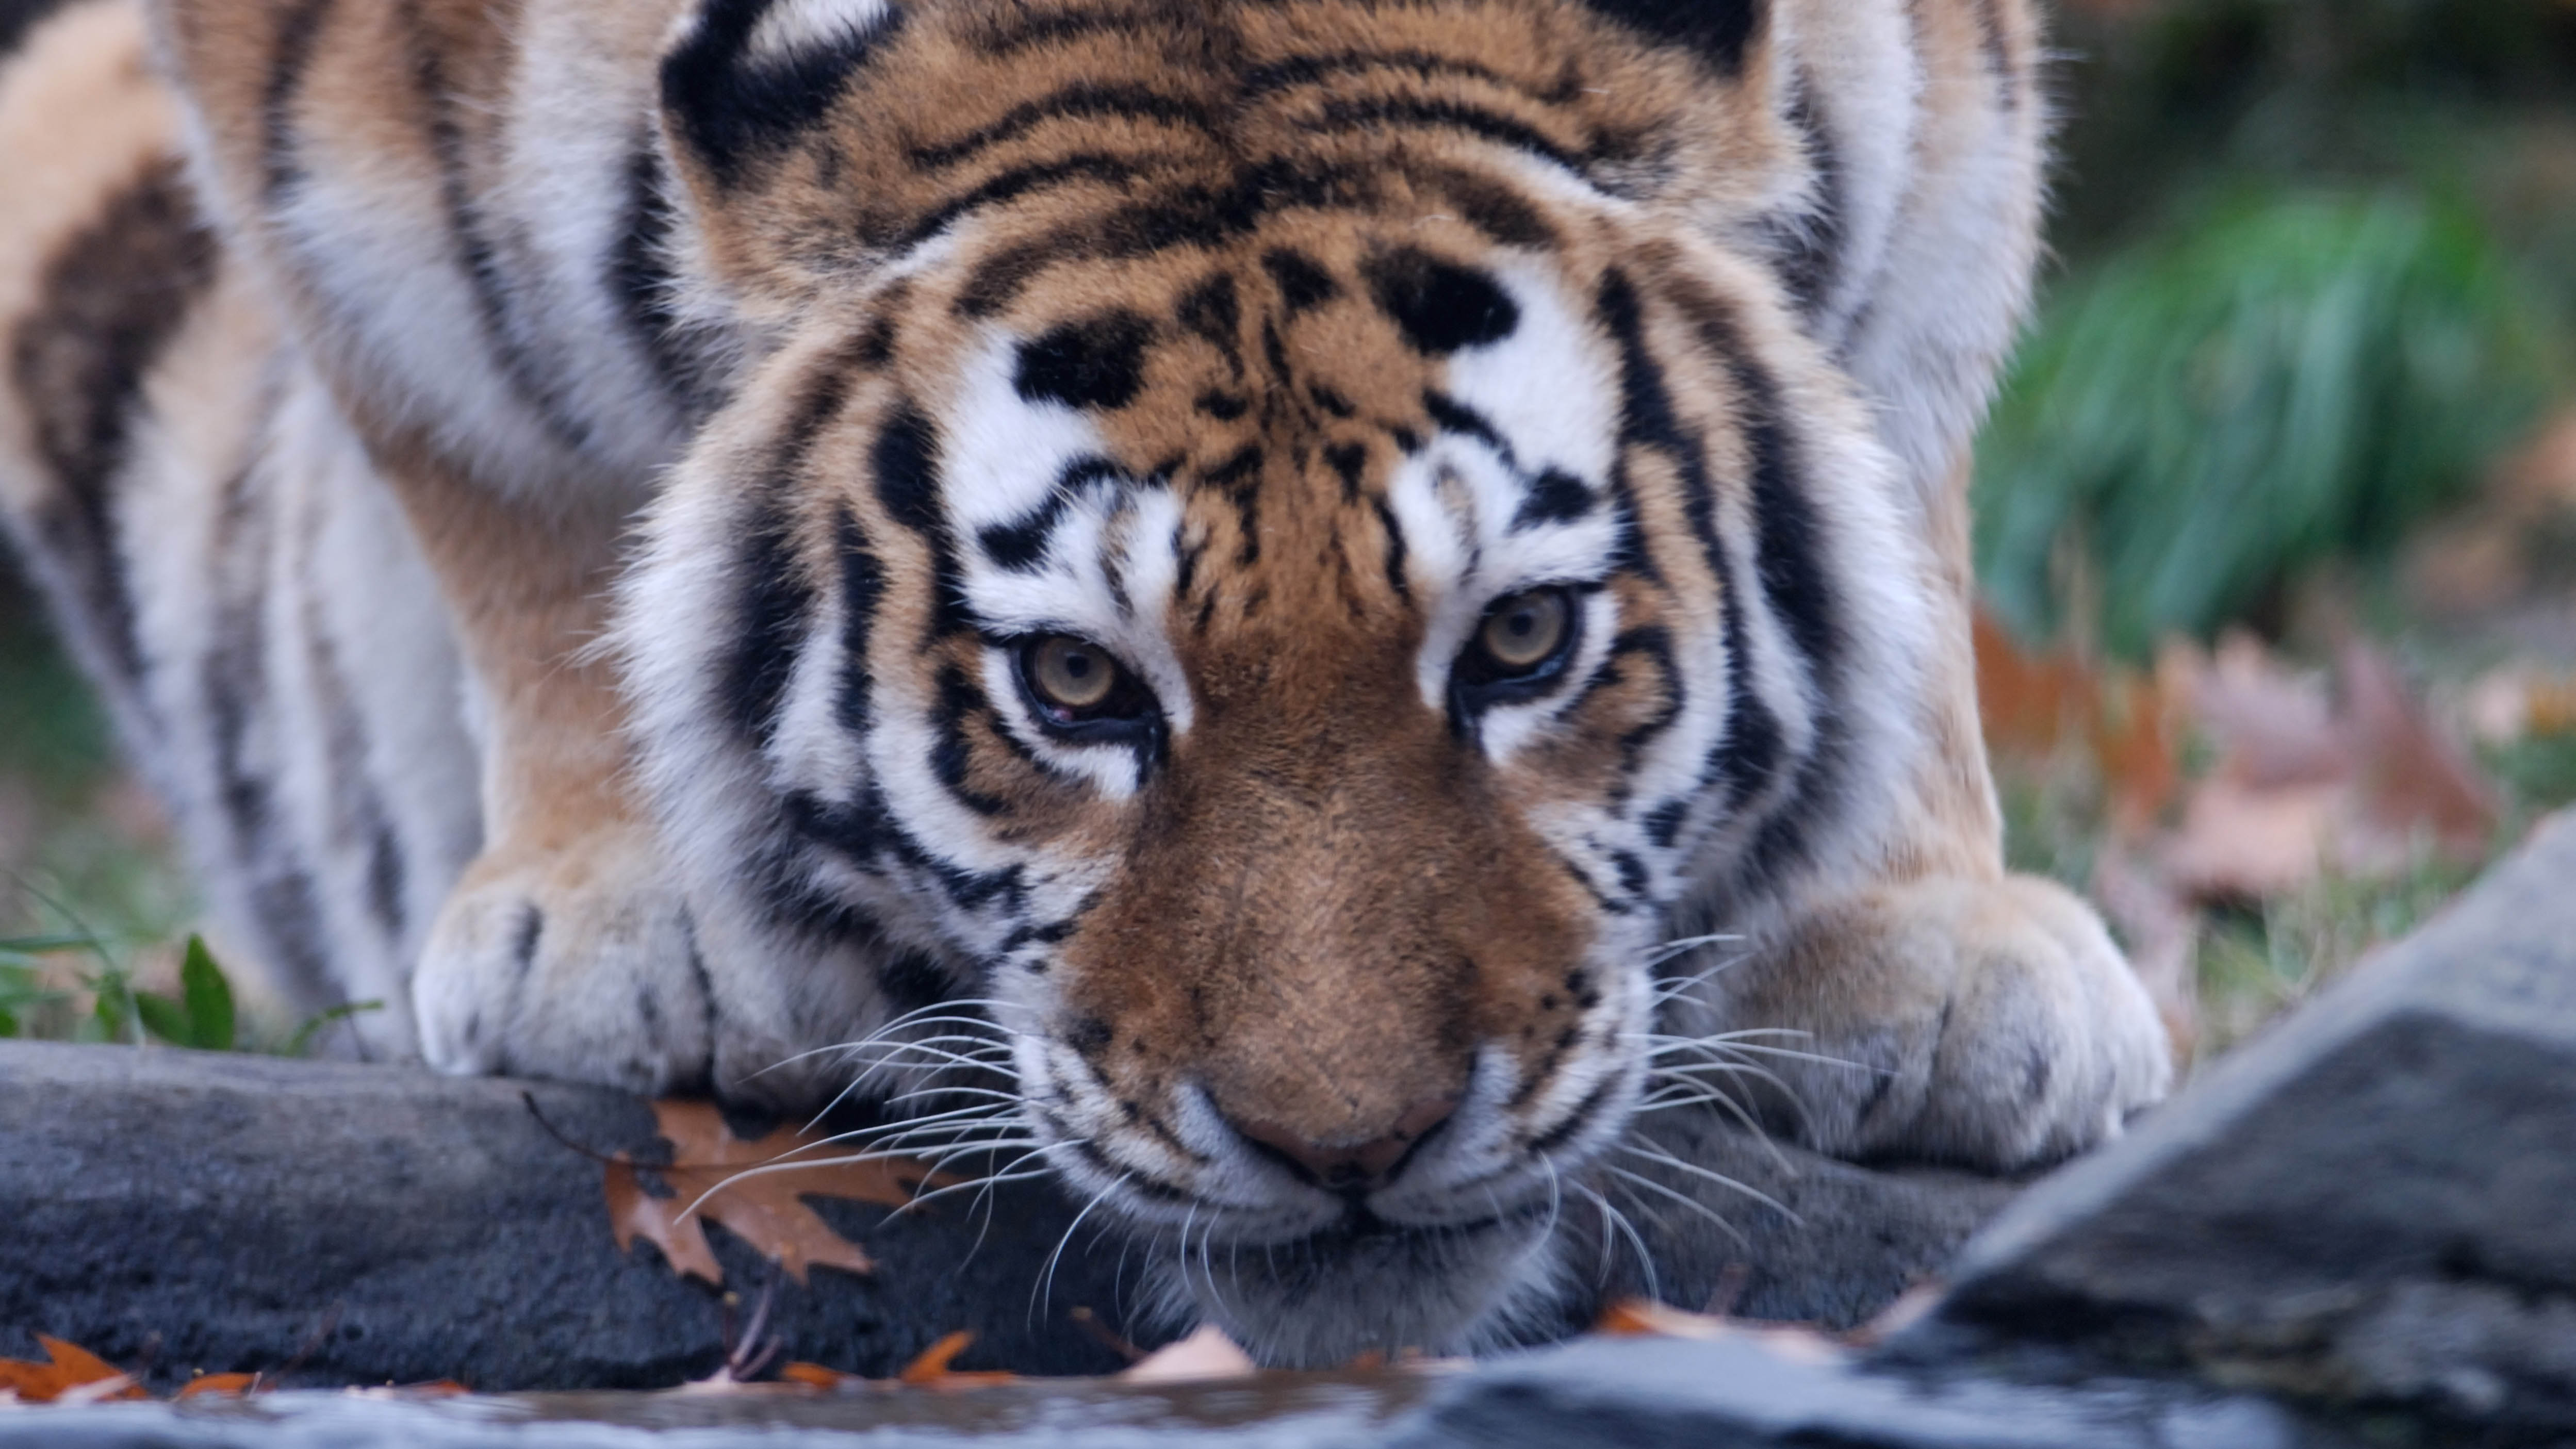 Tiger At Nyc Zoo Tests Positive For Coronavirus Cgtn